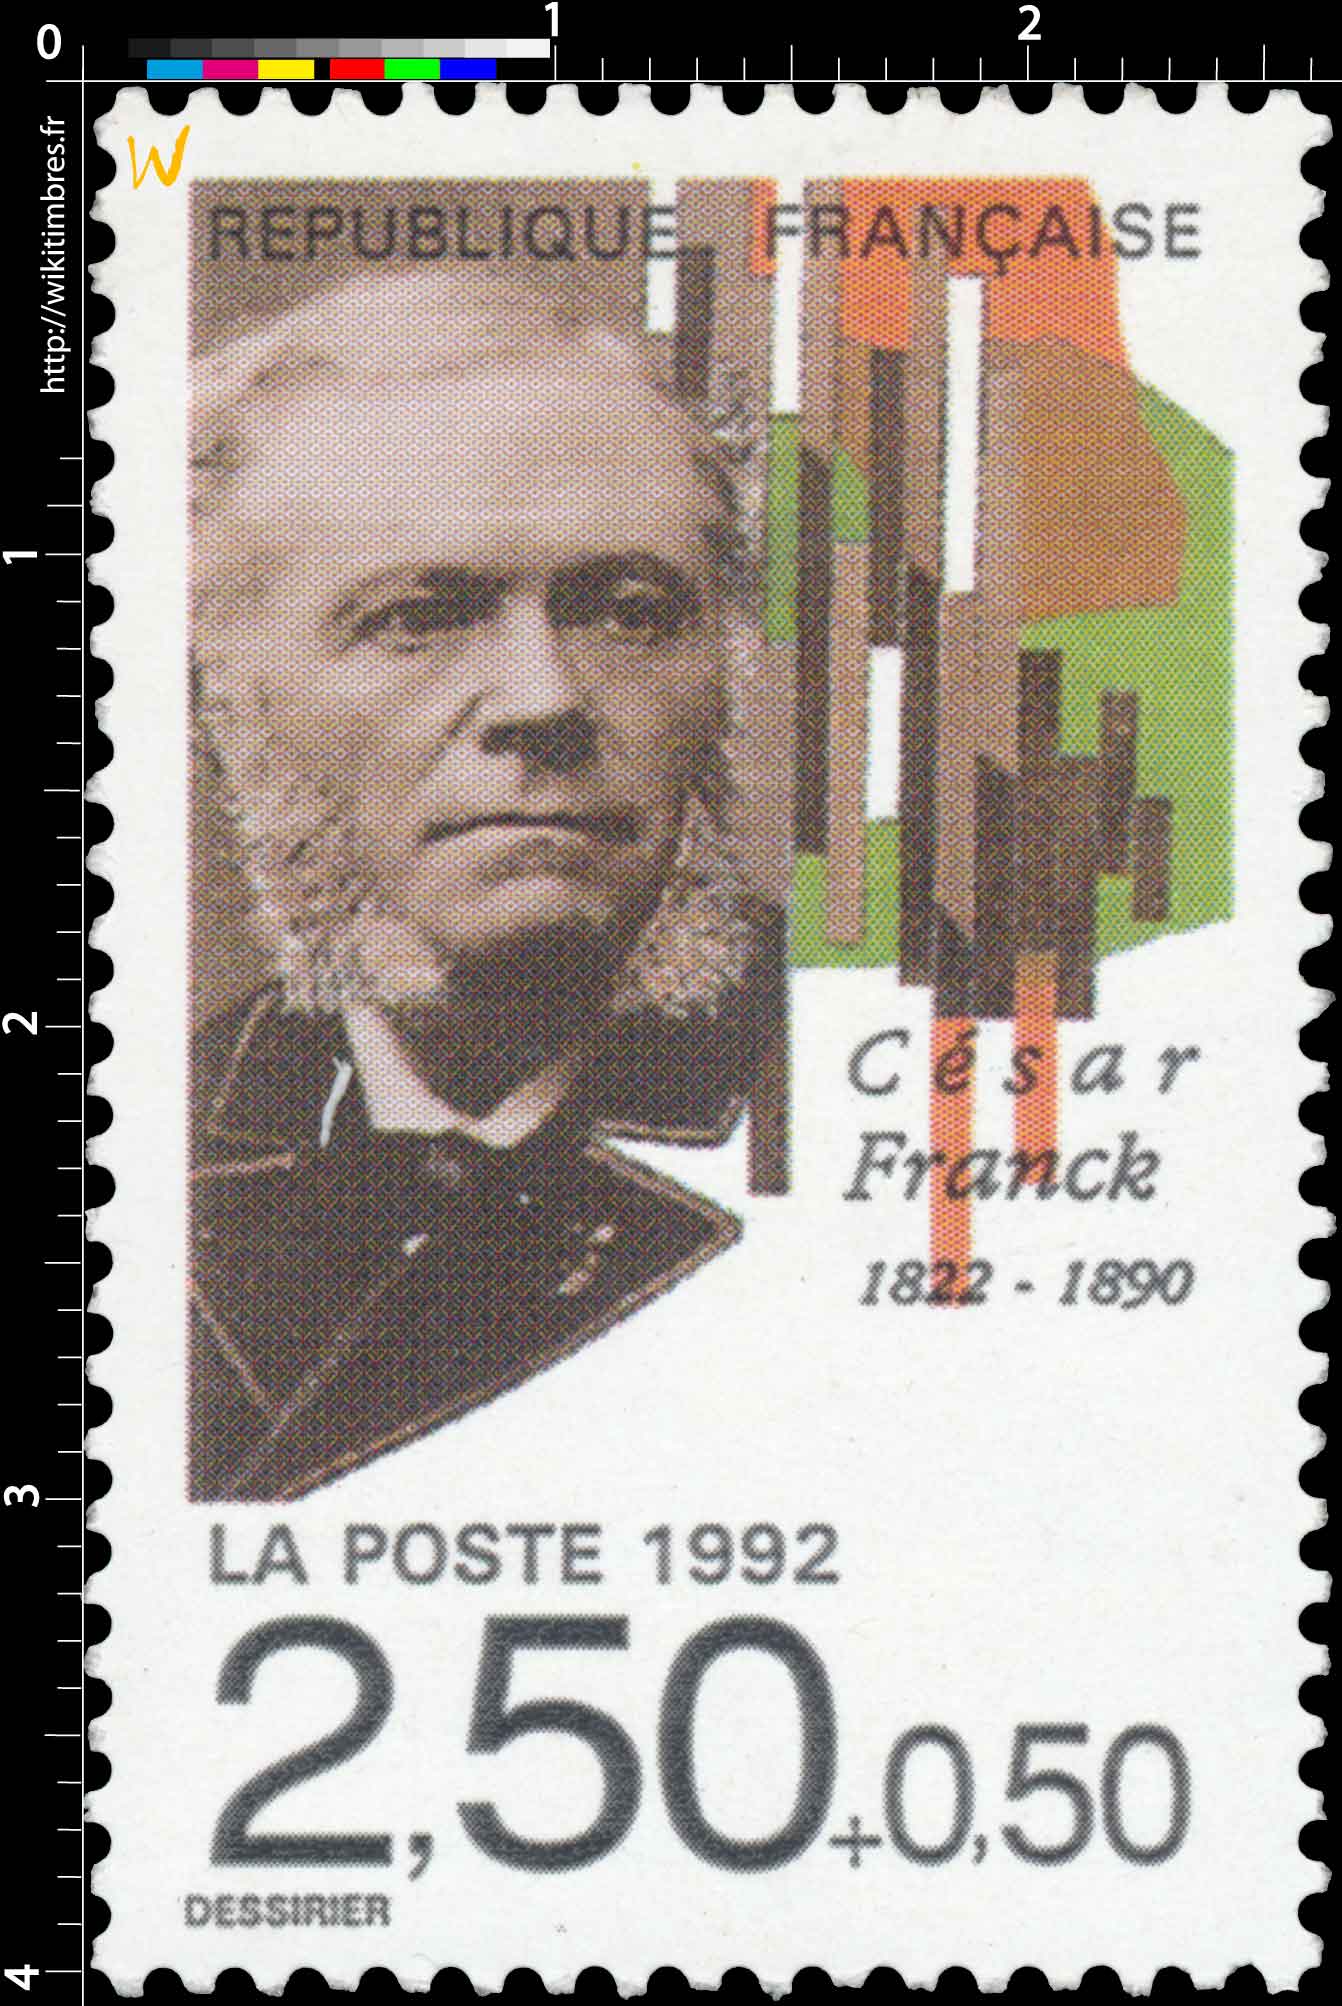 1992 César Franck 1822-1890